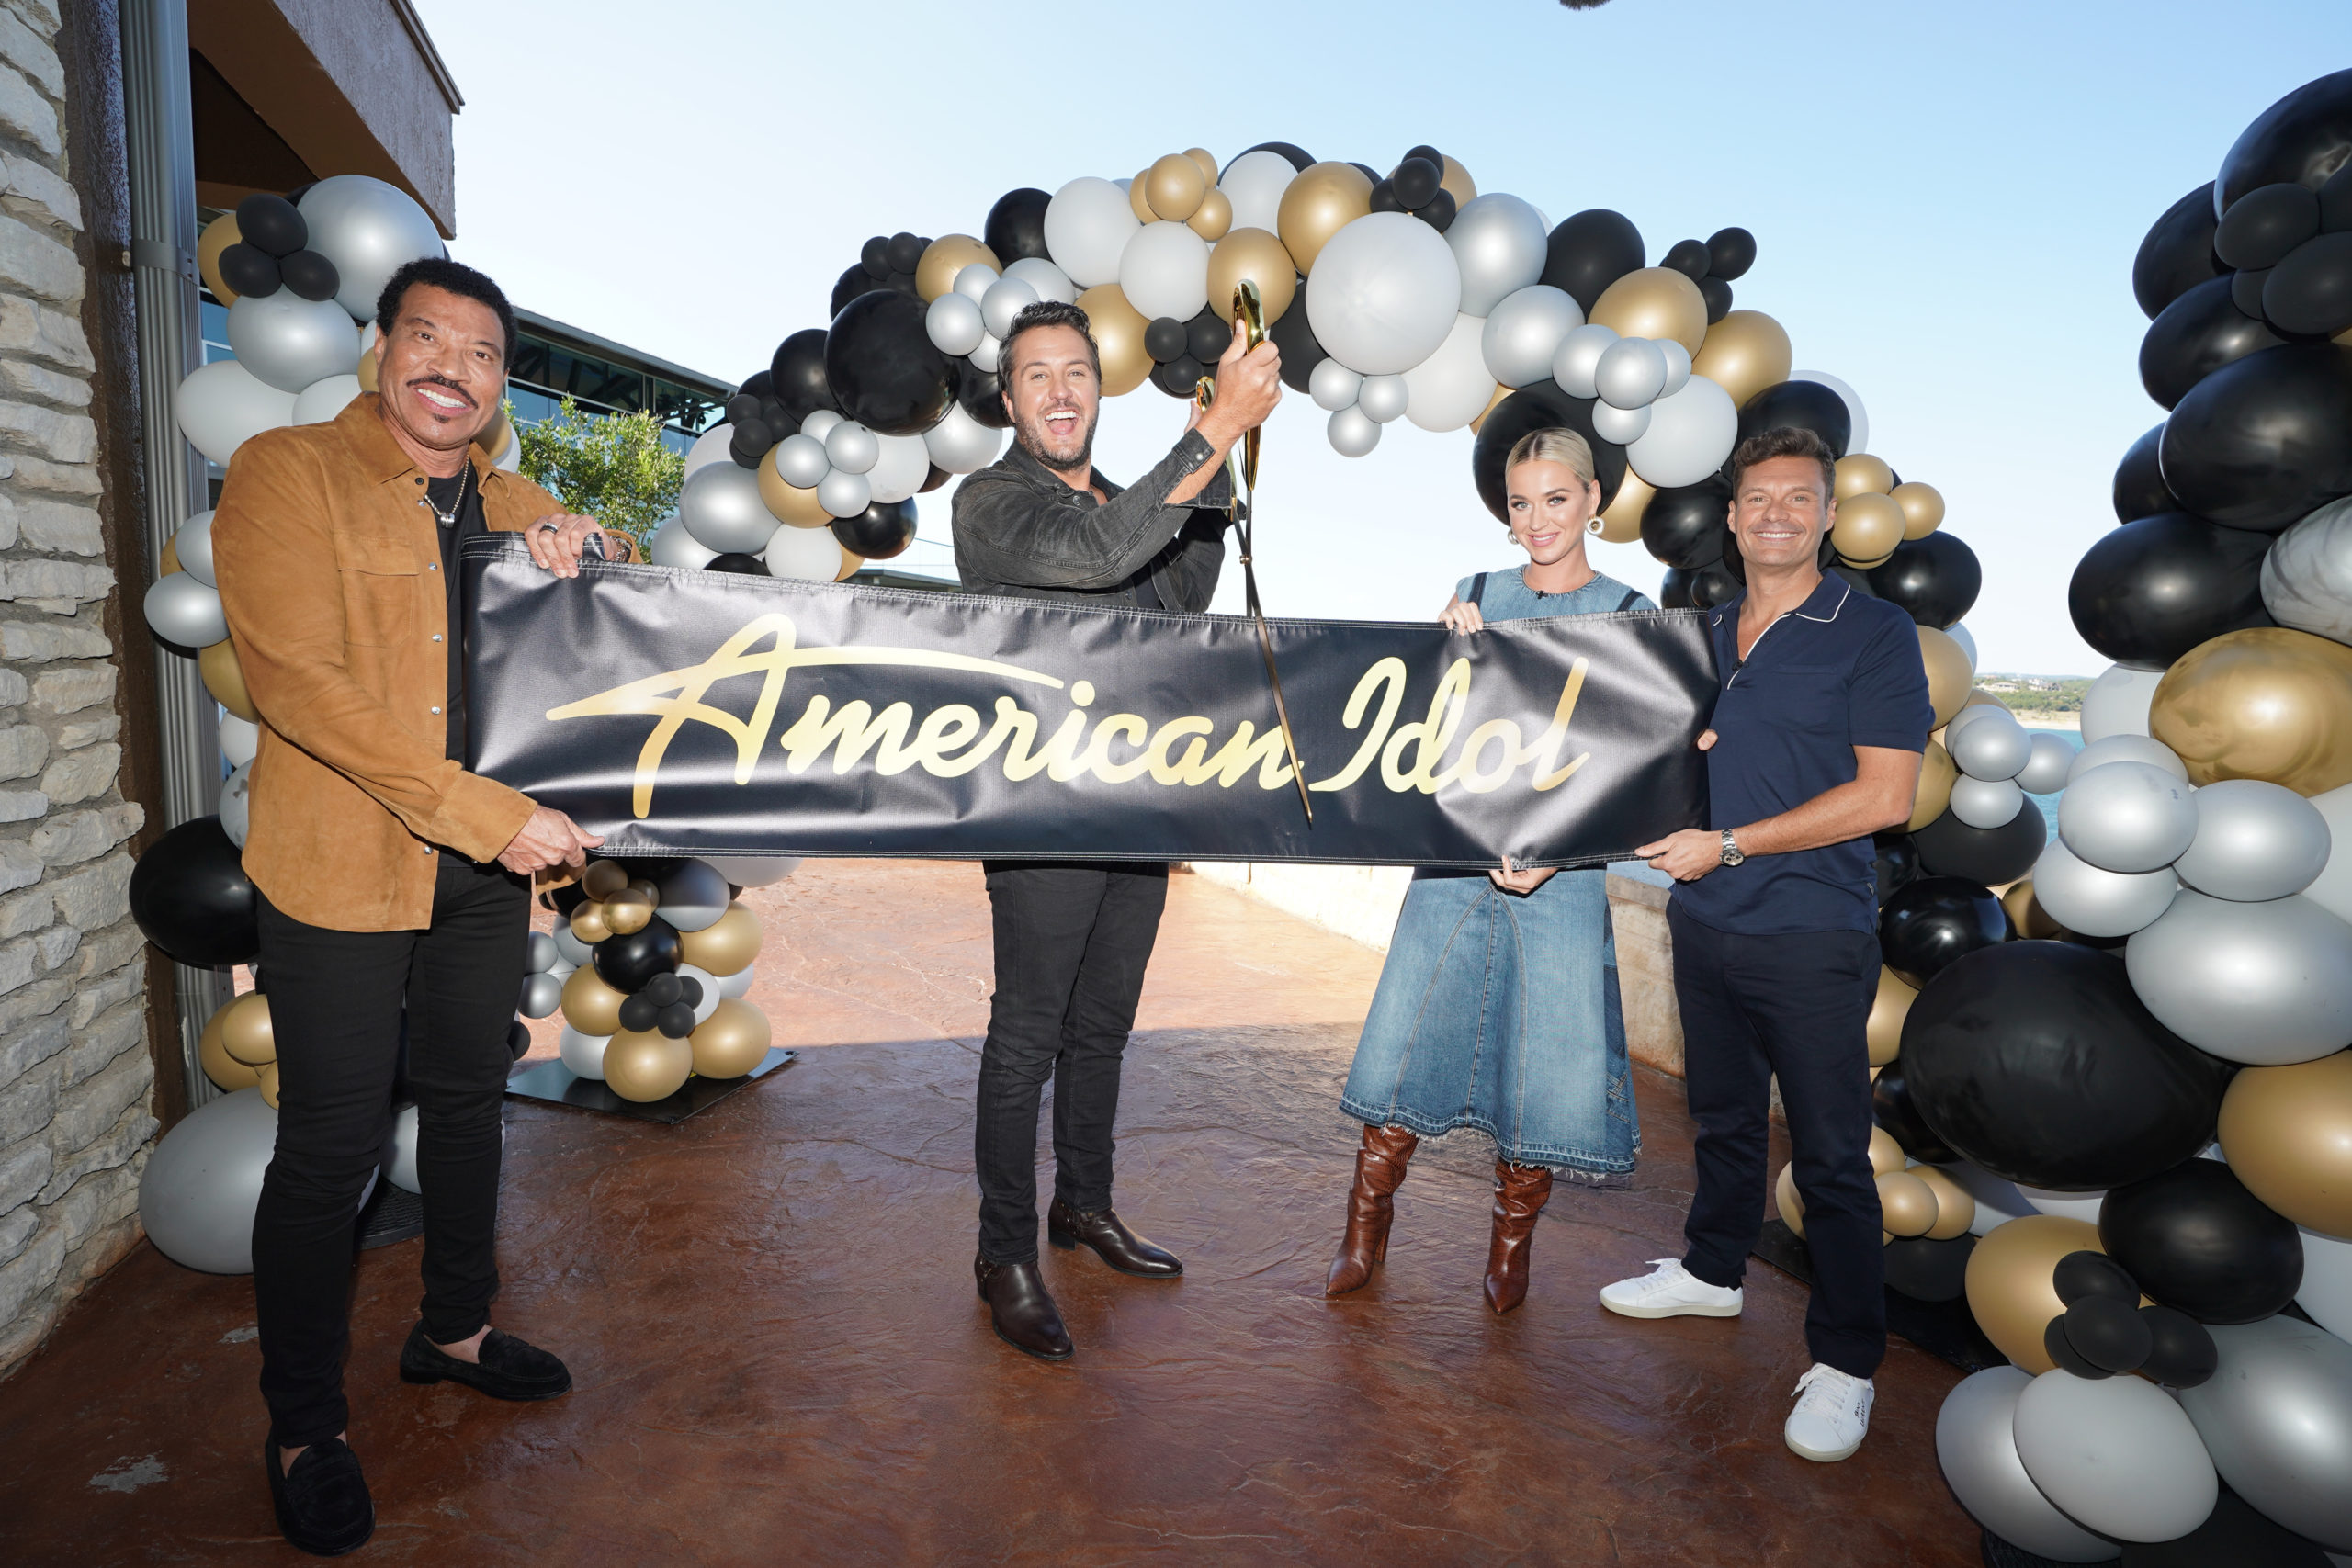 American Idol 2022 Spoilers: Top 24 Season 20 Contestant List